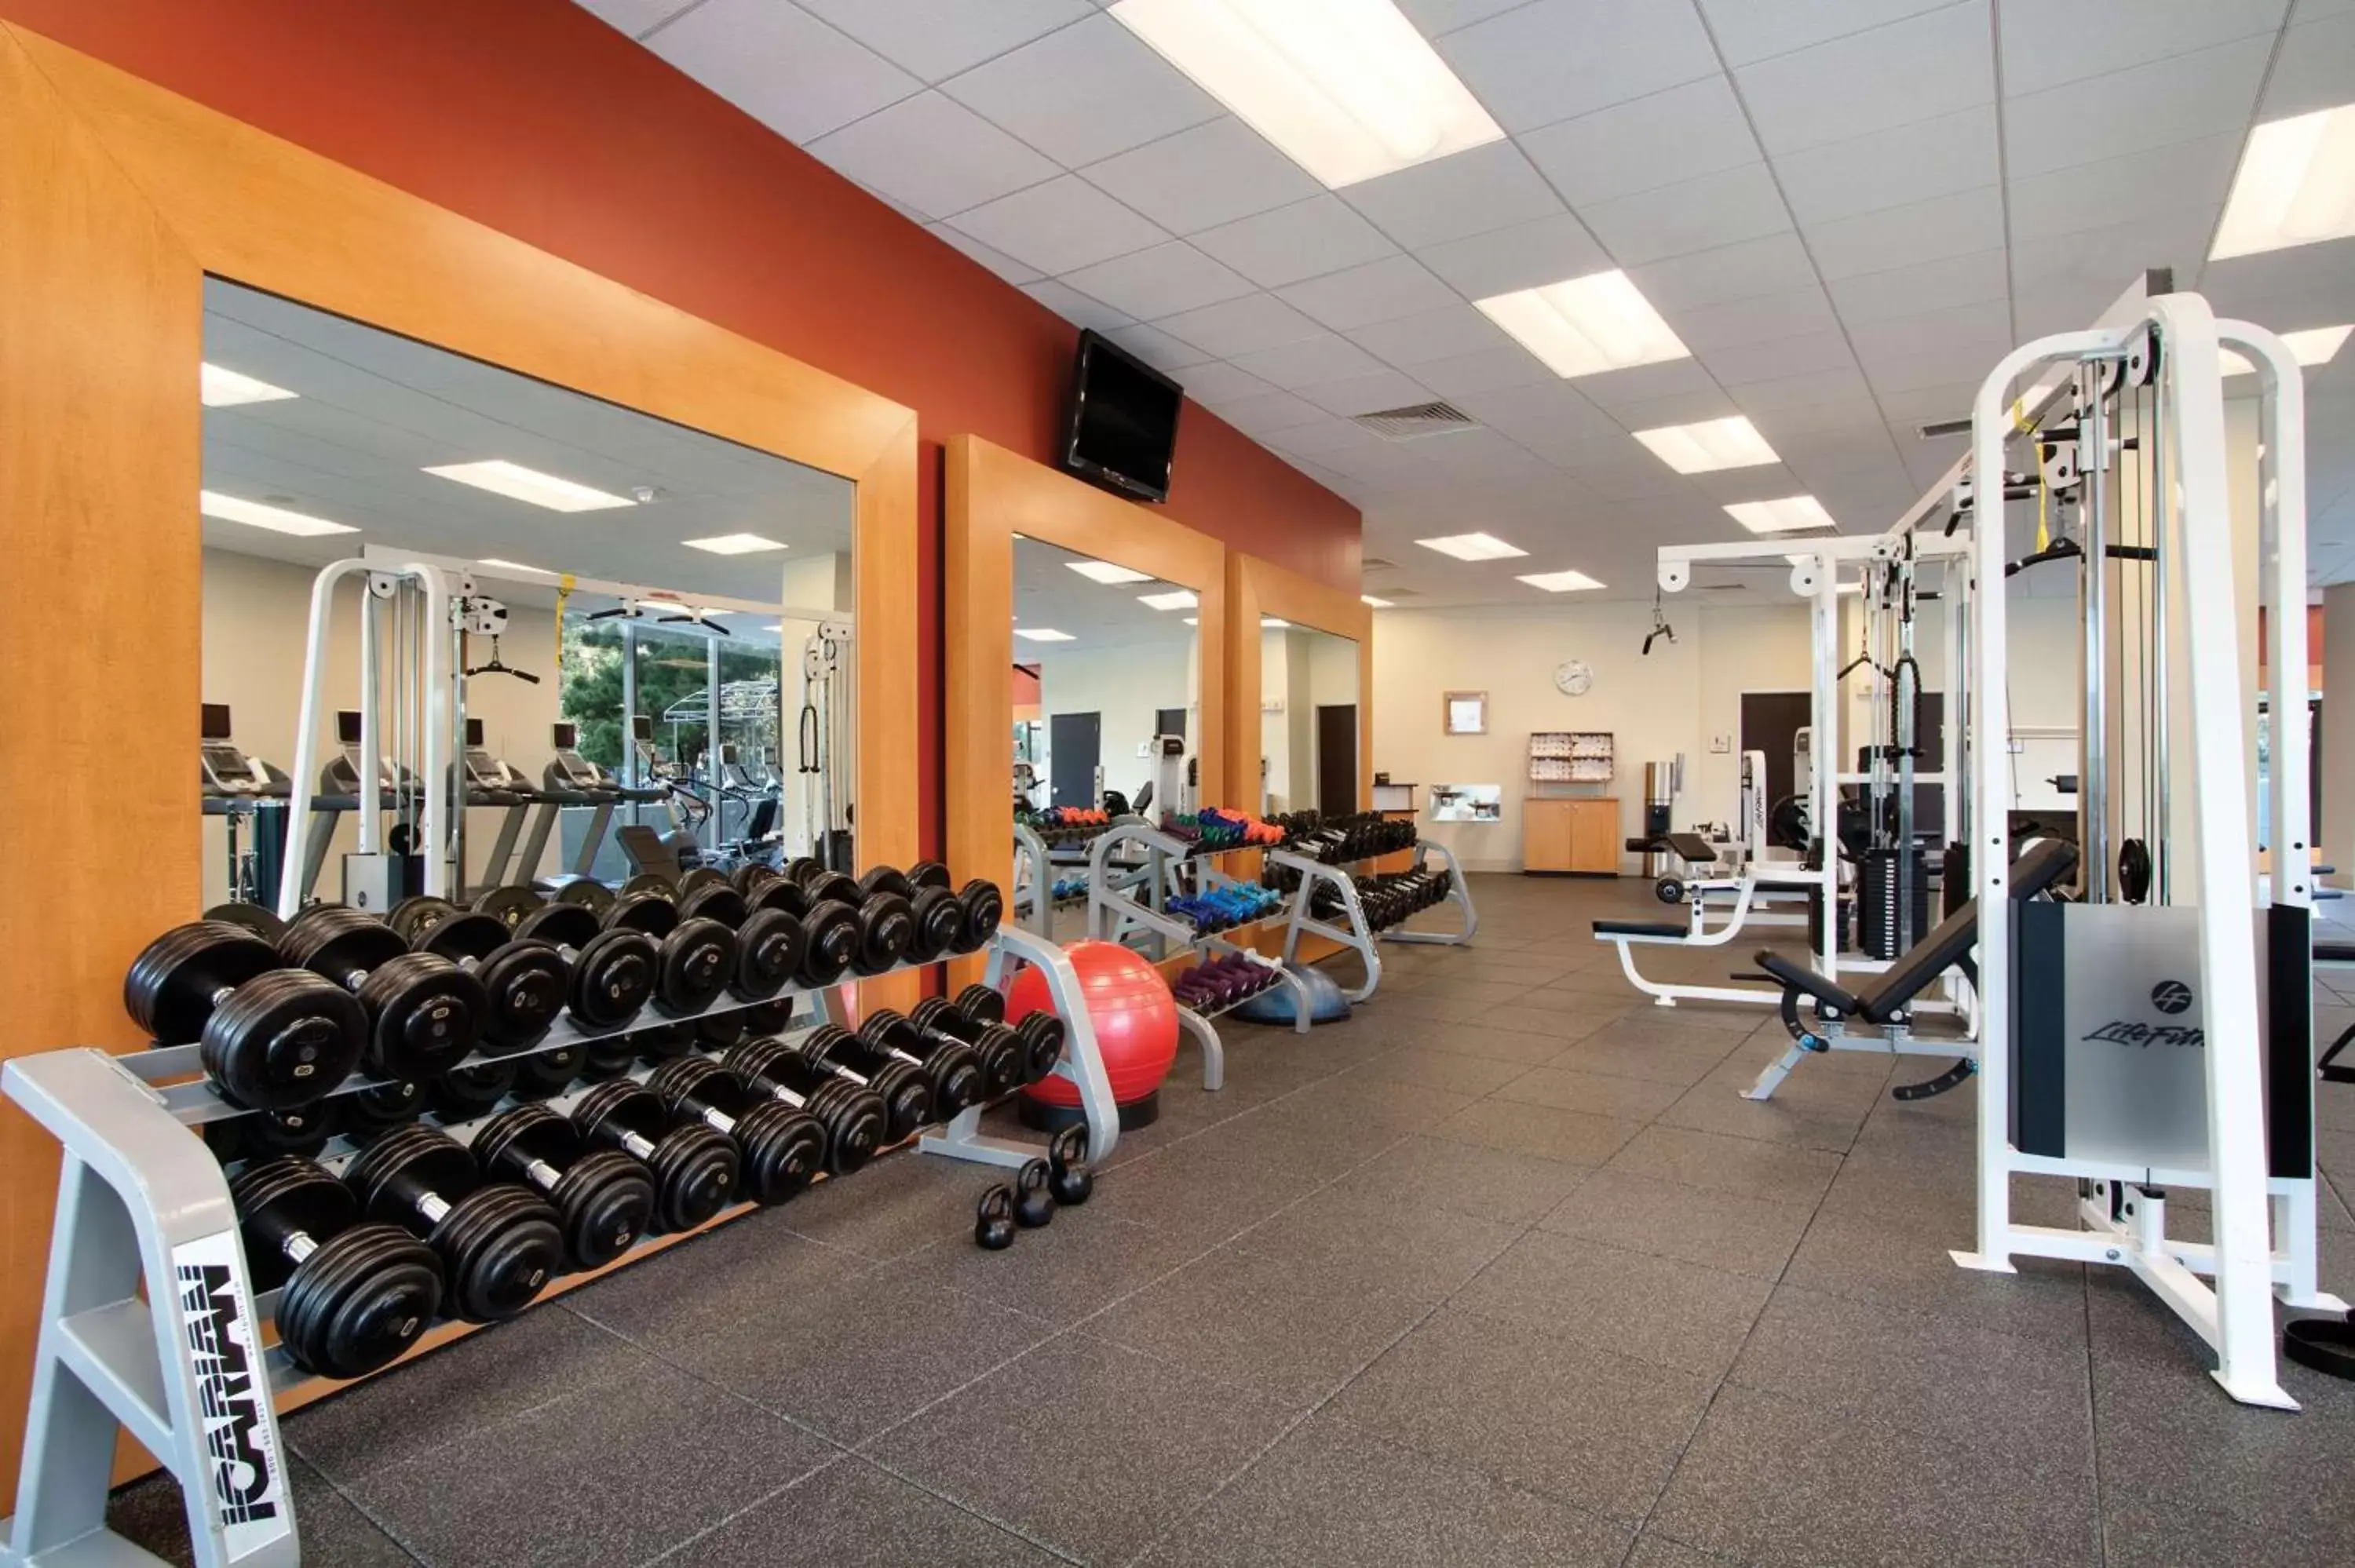 Fitness centre/facilities, Fitness Center/Facilities in Washington Hilton